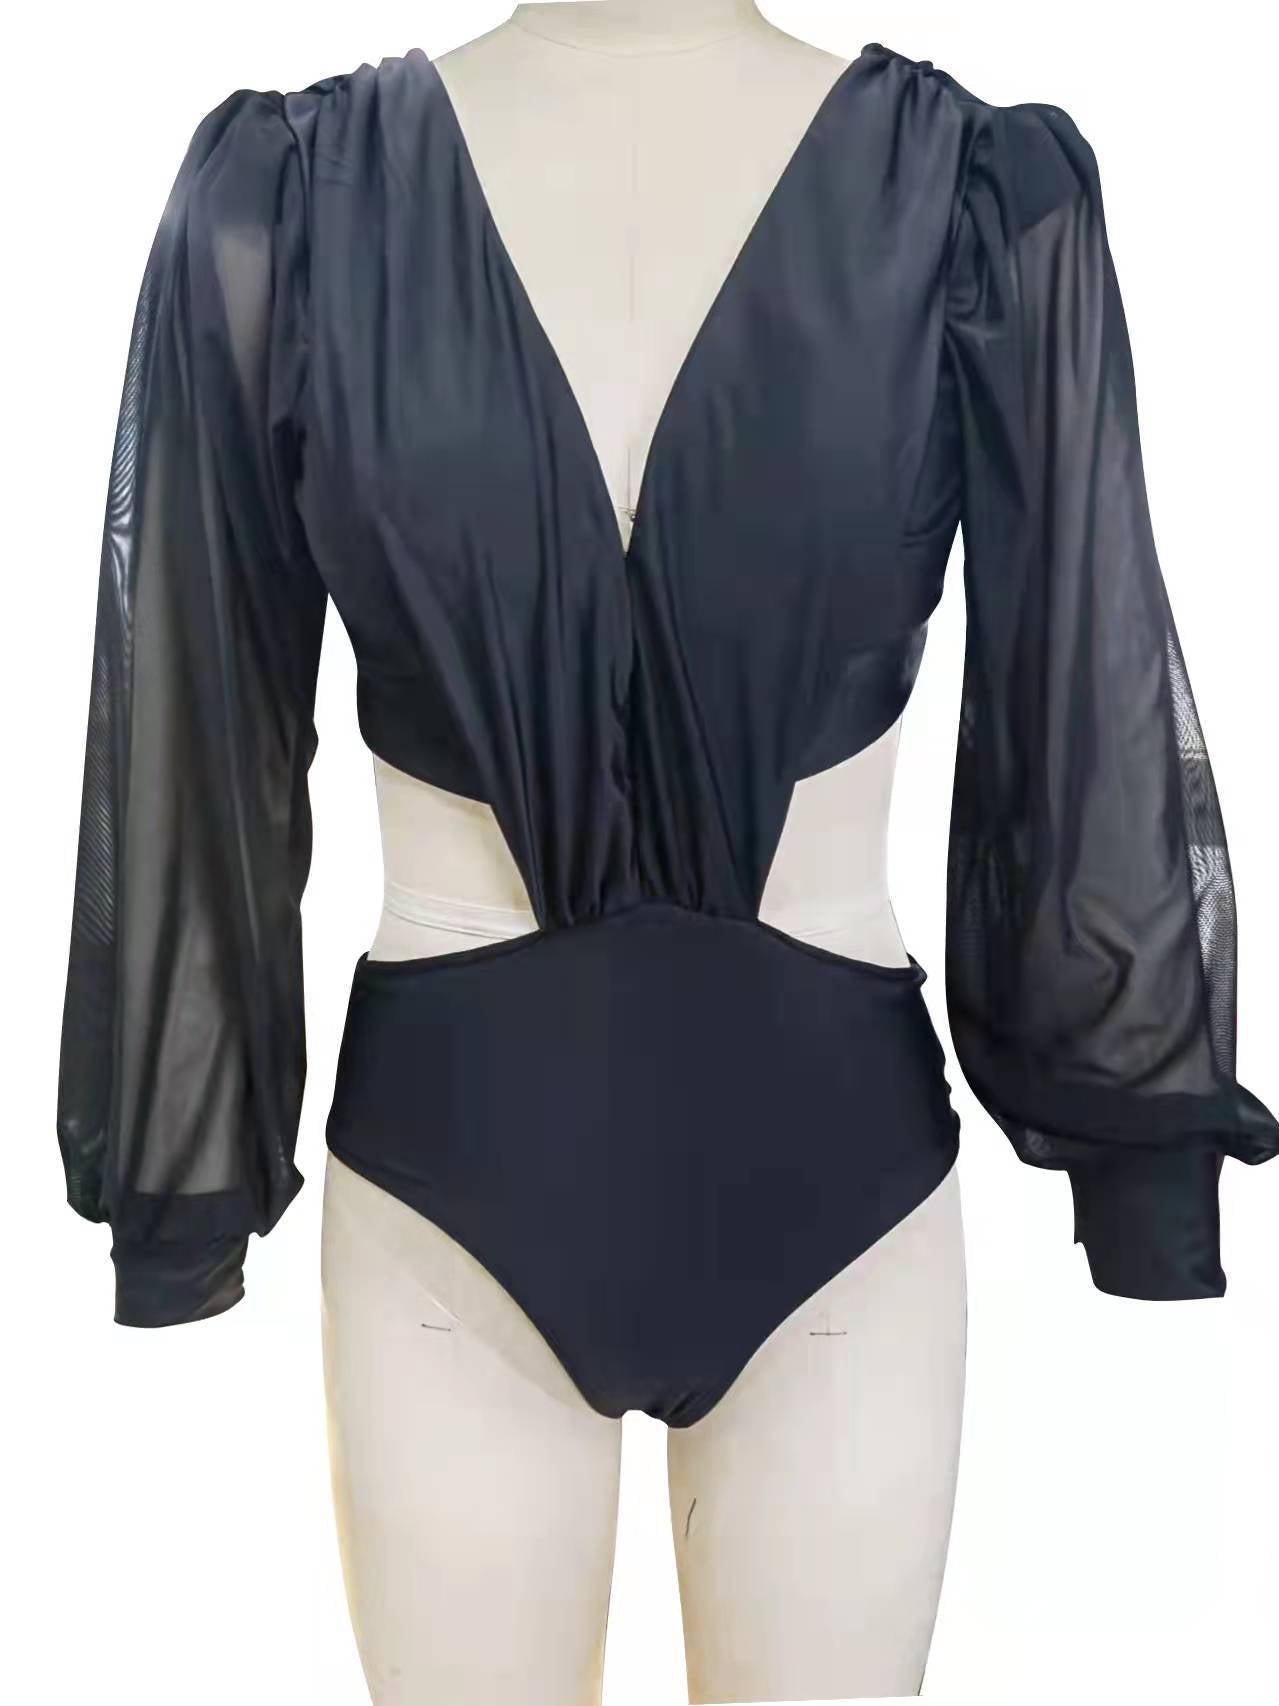 Sexy Long Sleeves Summer Bikini Swimsuits-Swimwear-Black-S-Free Shipping at meselling99